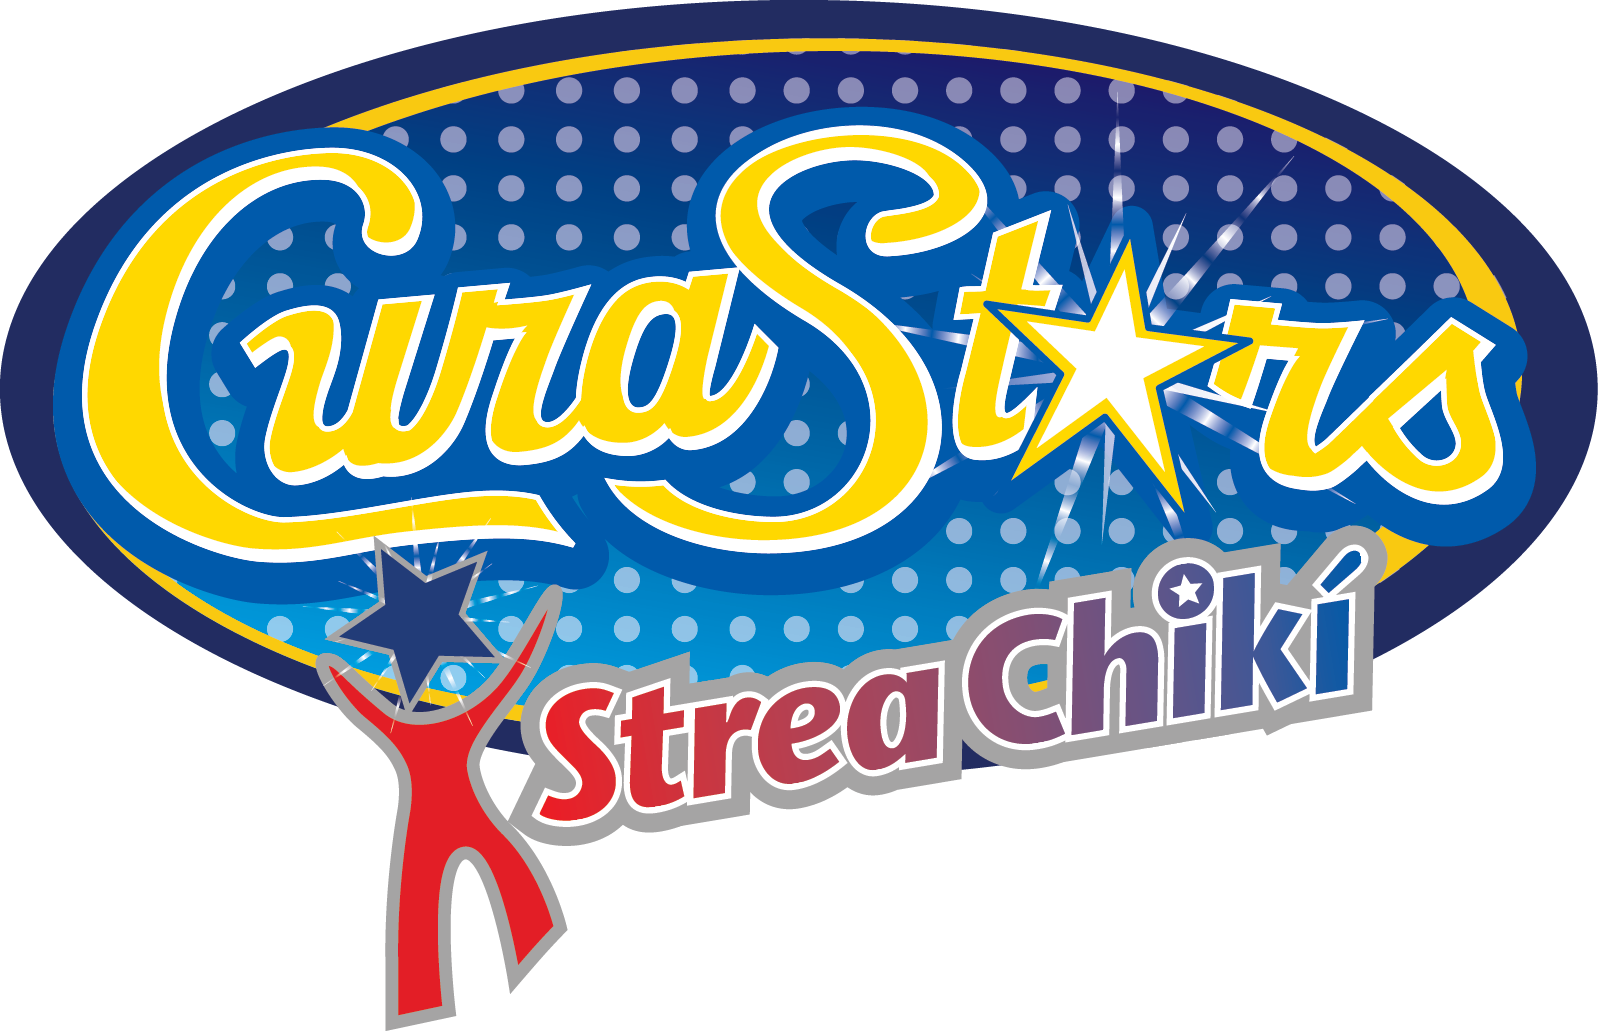 CuraStars Strea Chiki.